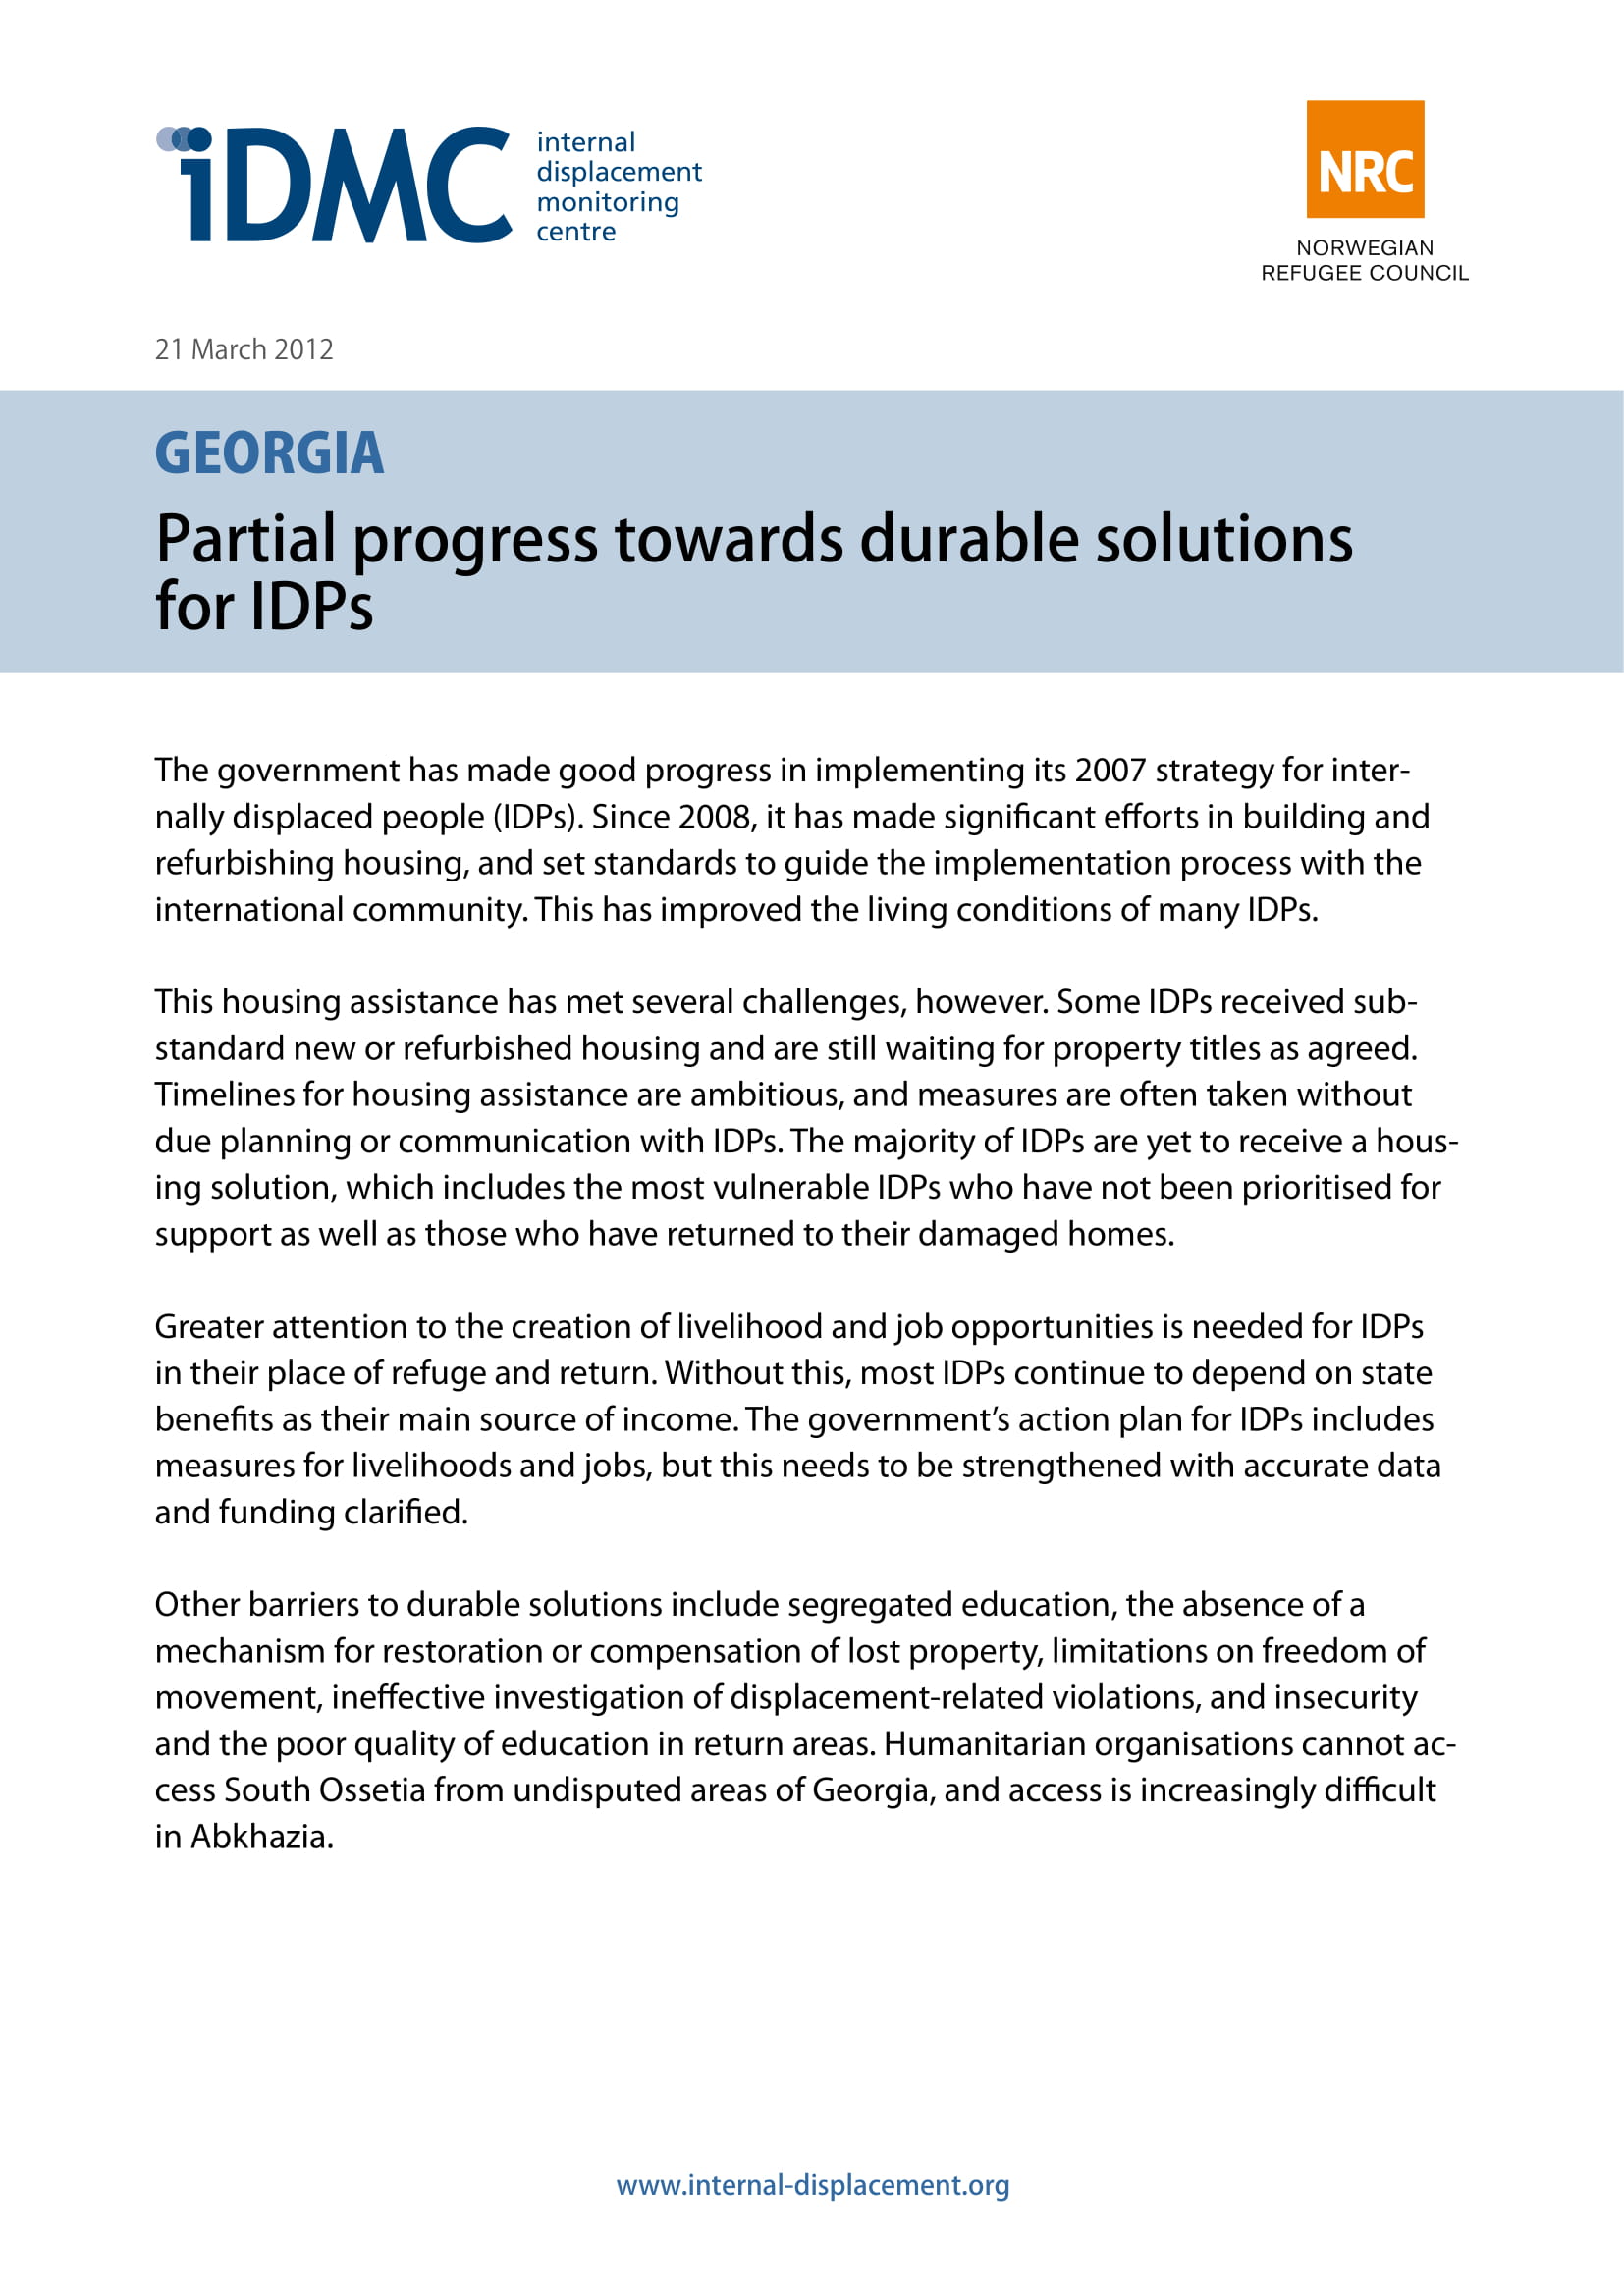 Georgia: Partial progress towards durable solutions for IDPs